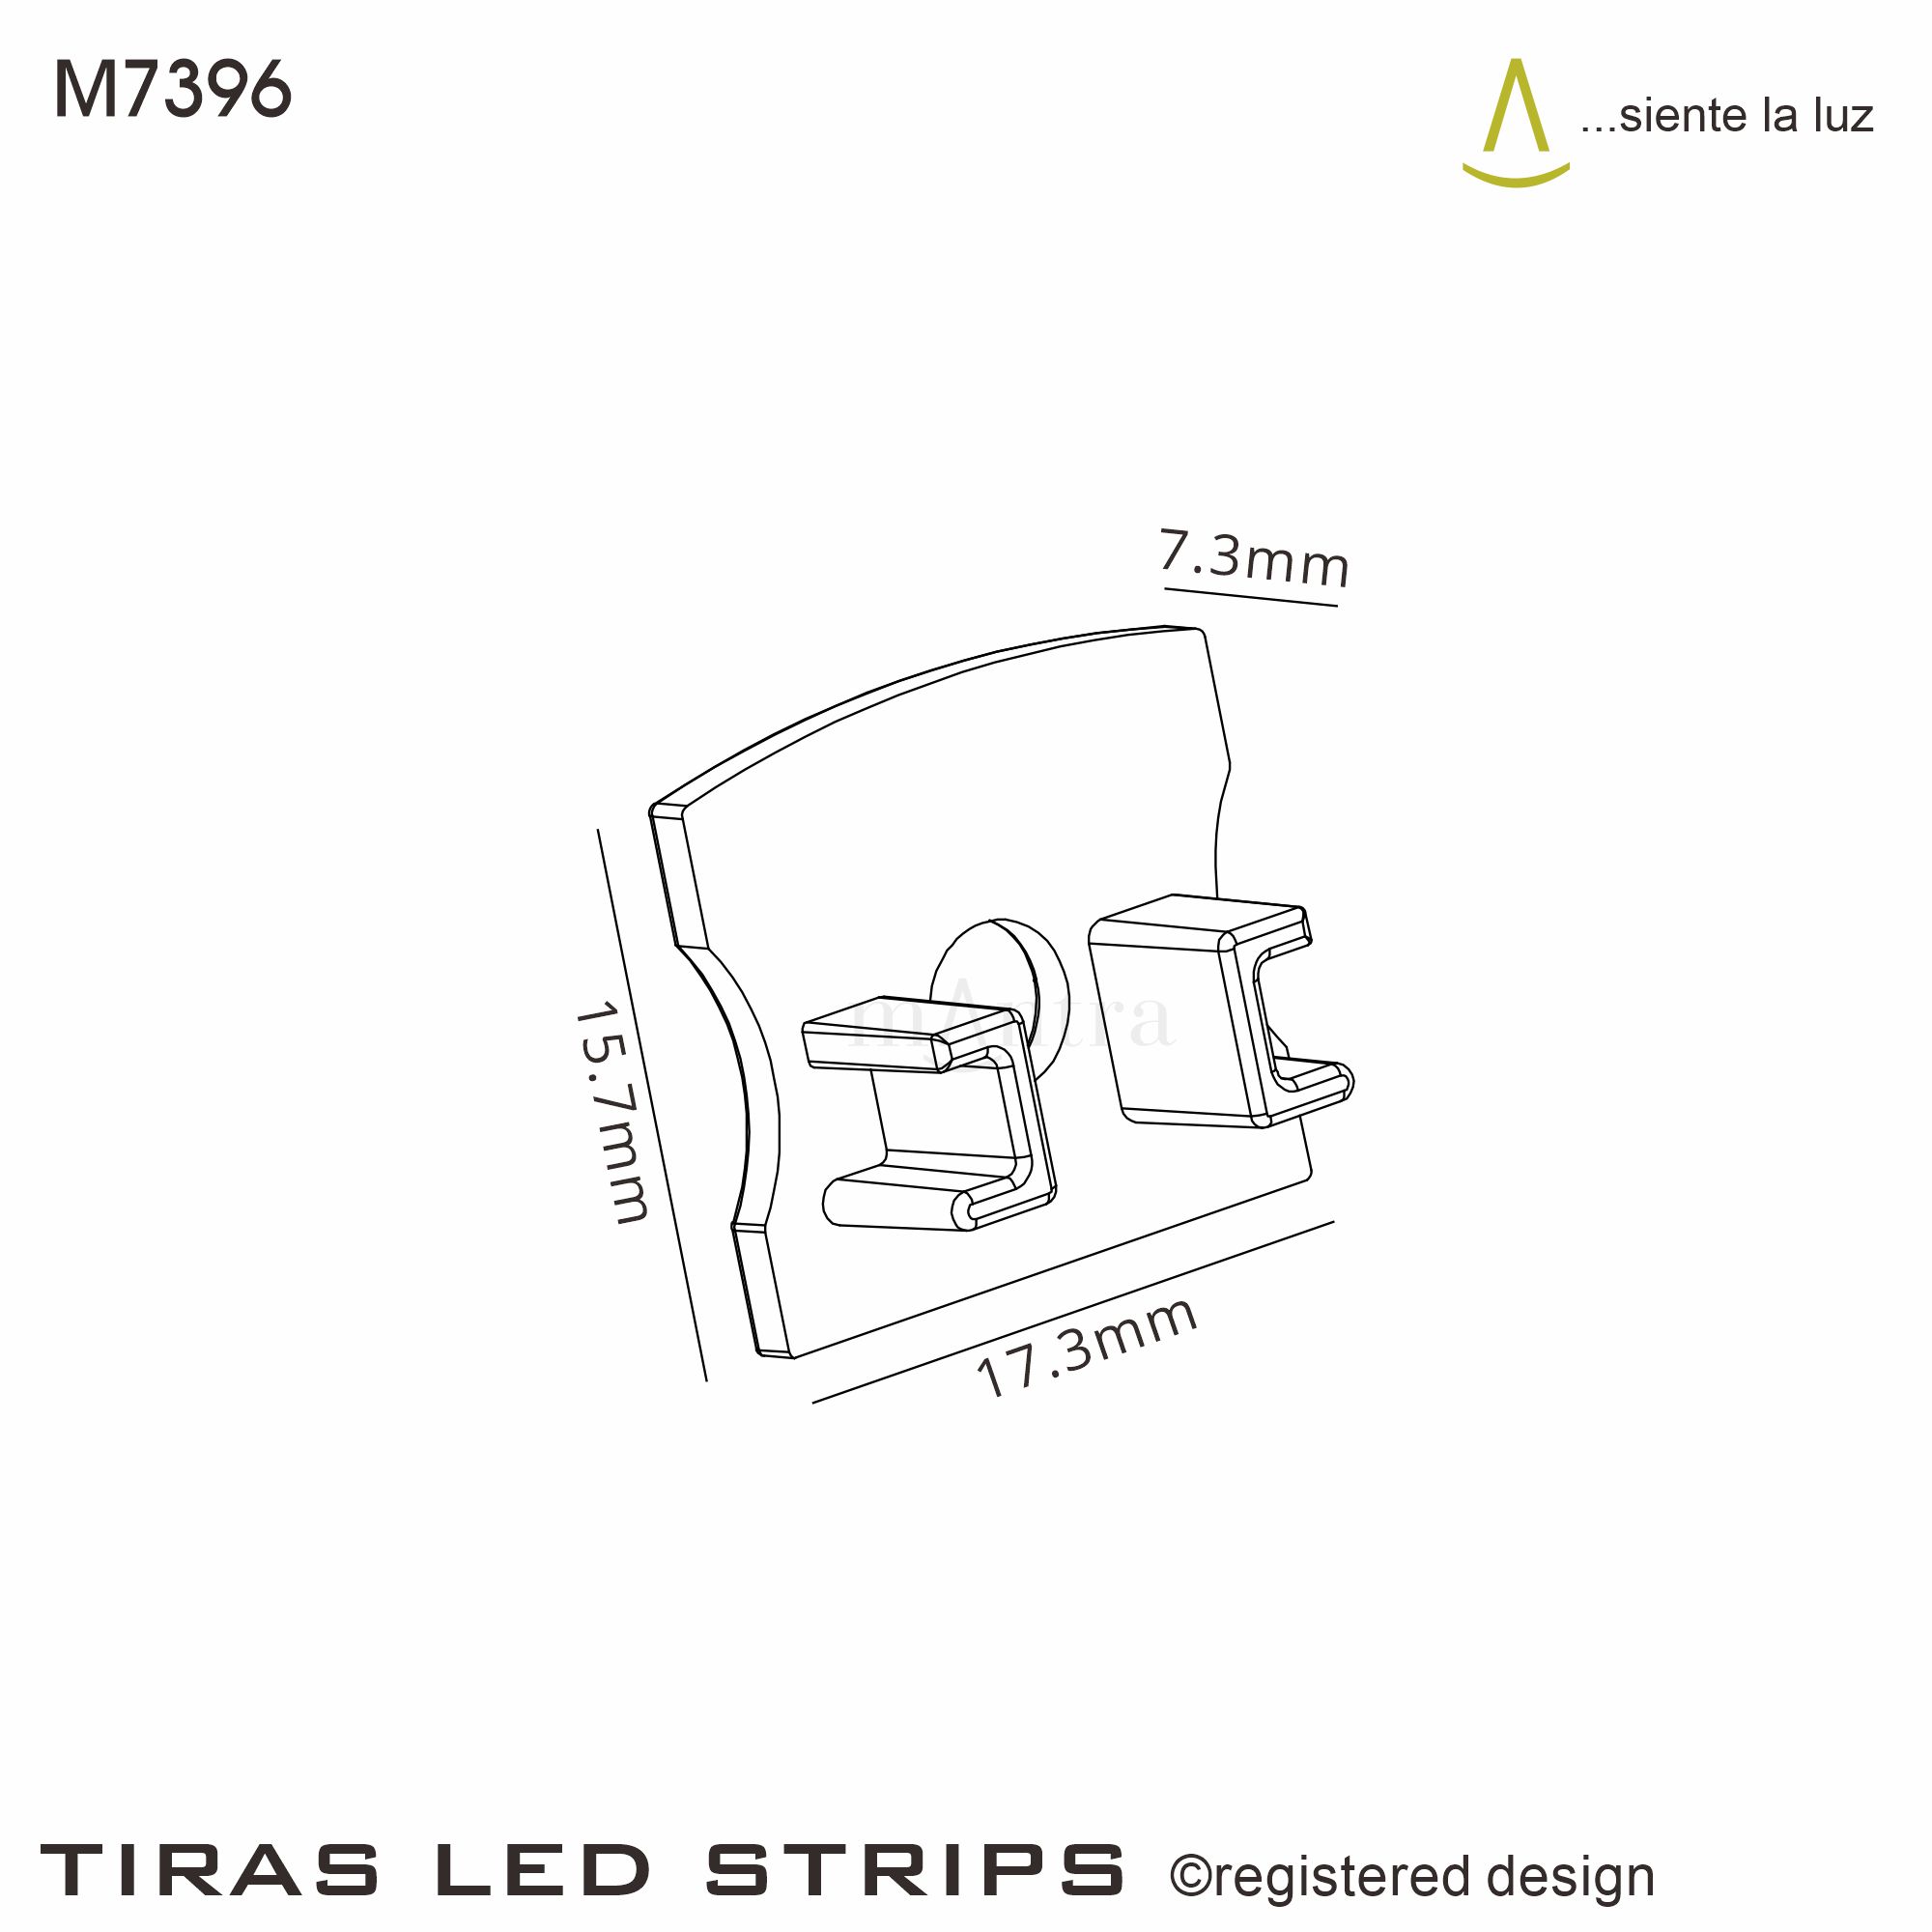 M7396  Tiras LED Strips  Profile End Cap With Hole (1pc); 17.3 x 15.7mm Black